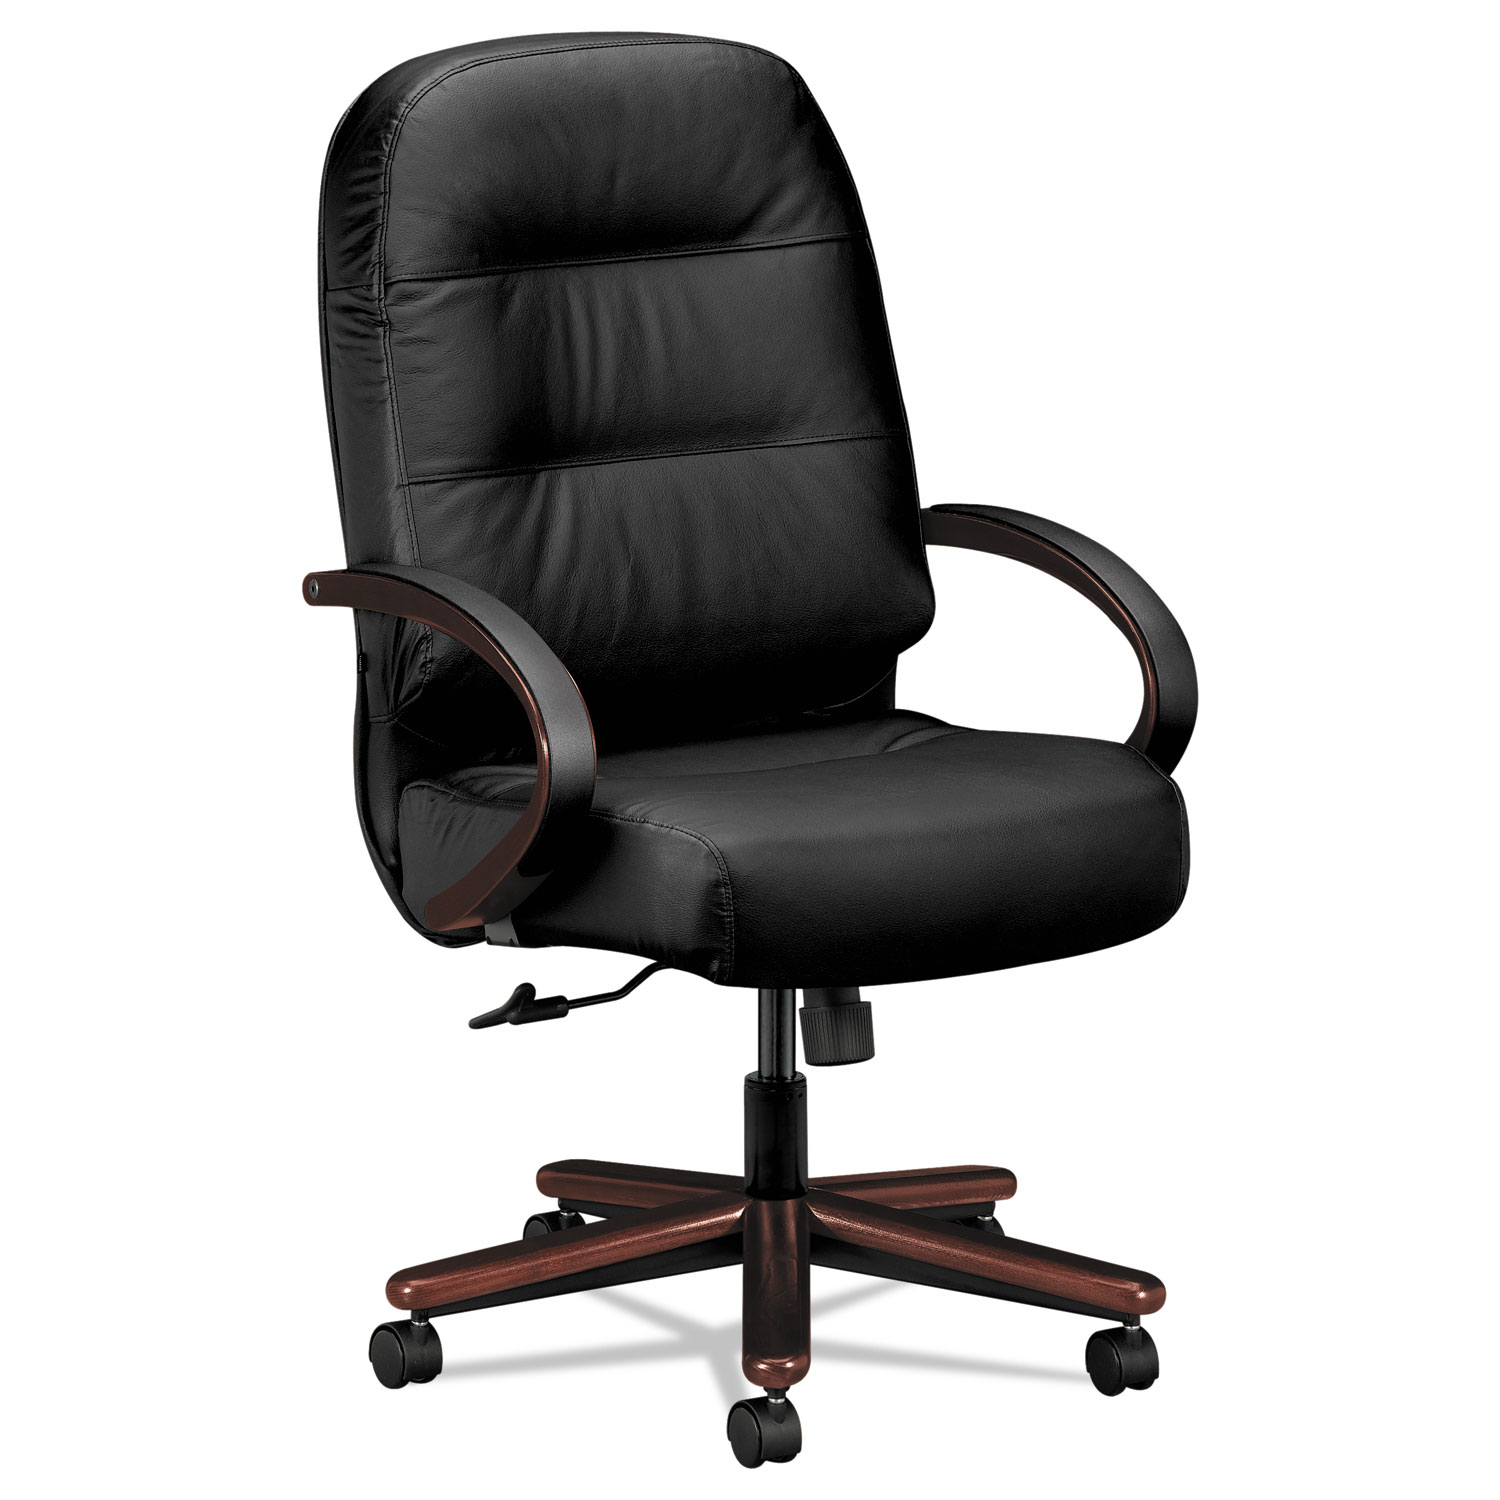  HON H2191.N.SR11 Pillow-Soft 2190 Series Executive High-Back Chair, Supports up to 300 lbs., Black Seat/Black Back, Mahogany Base (HON2191NSR11) 